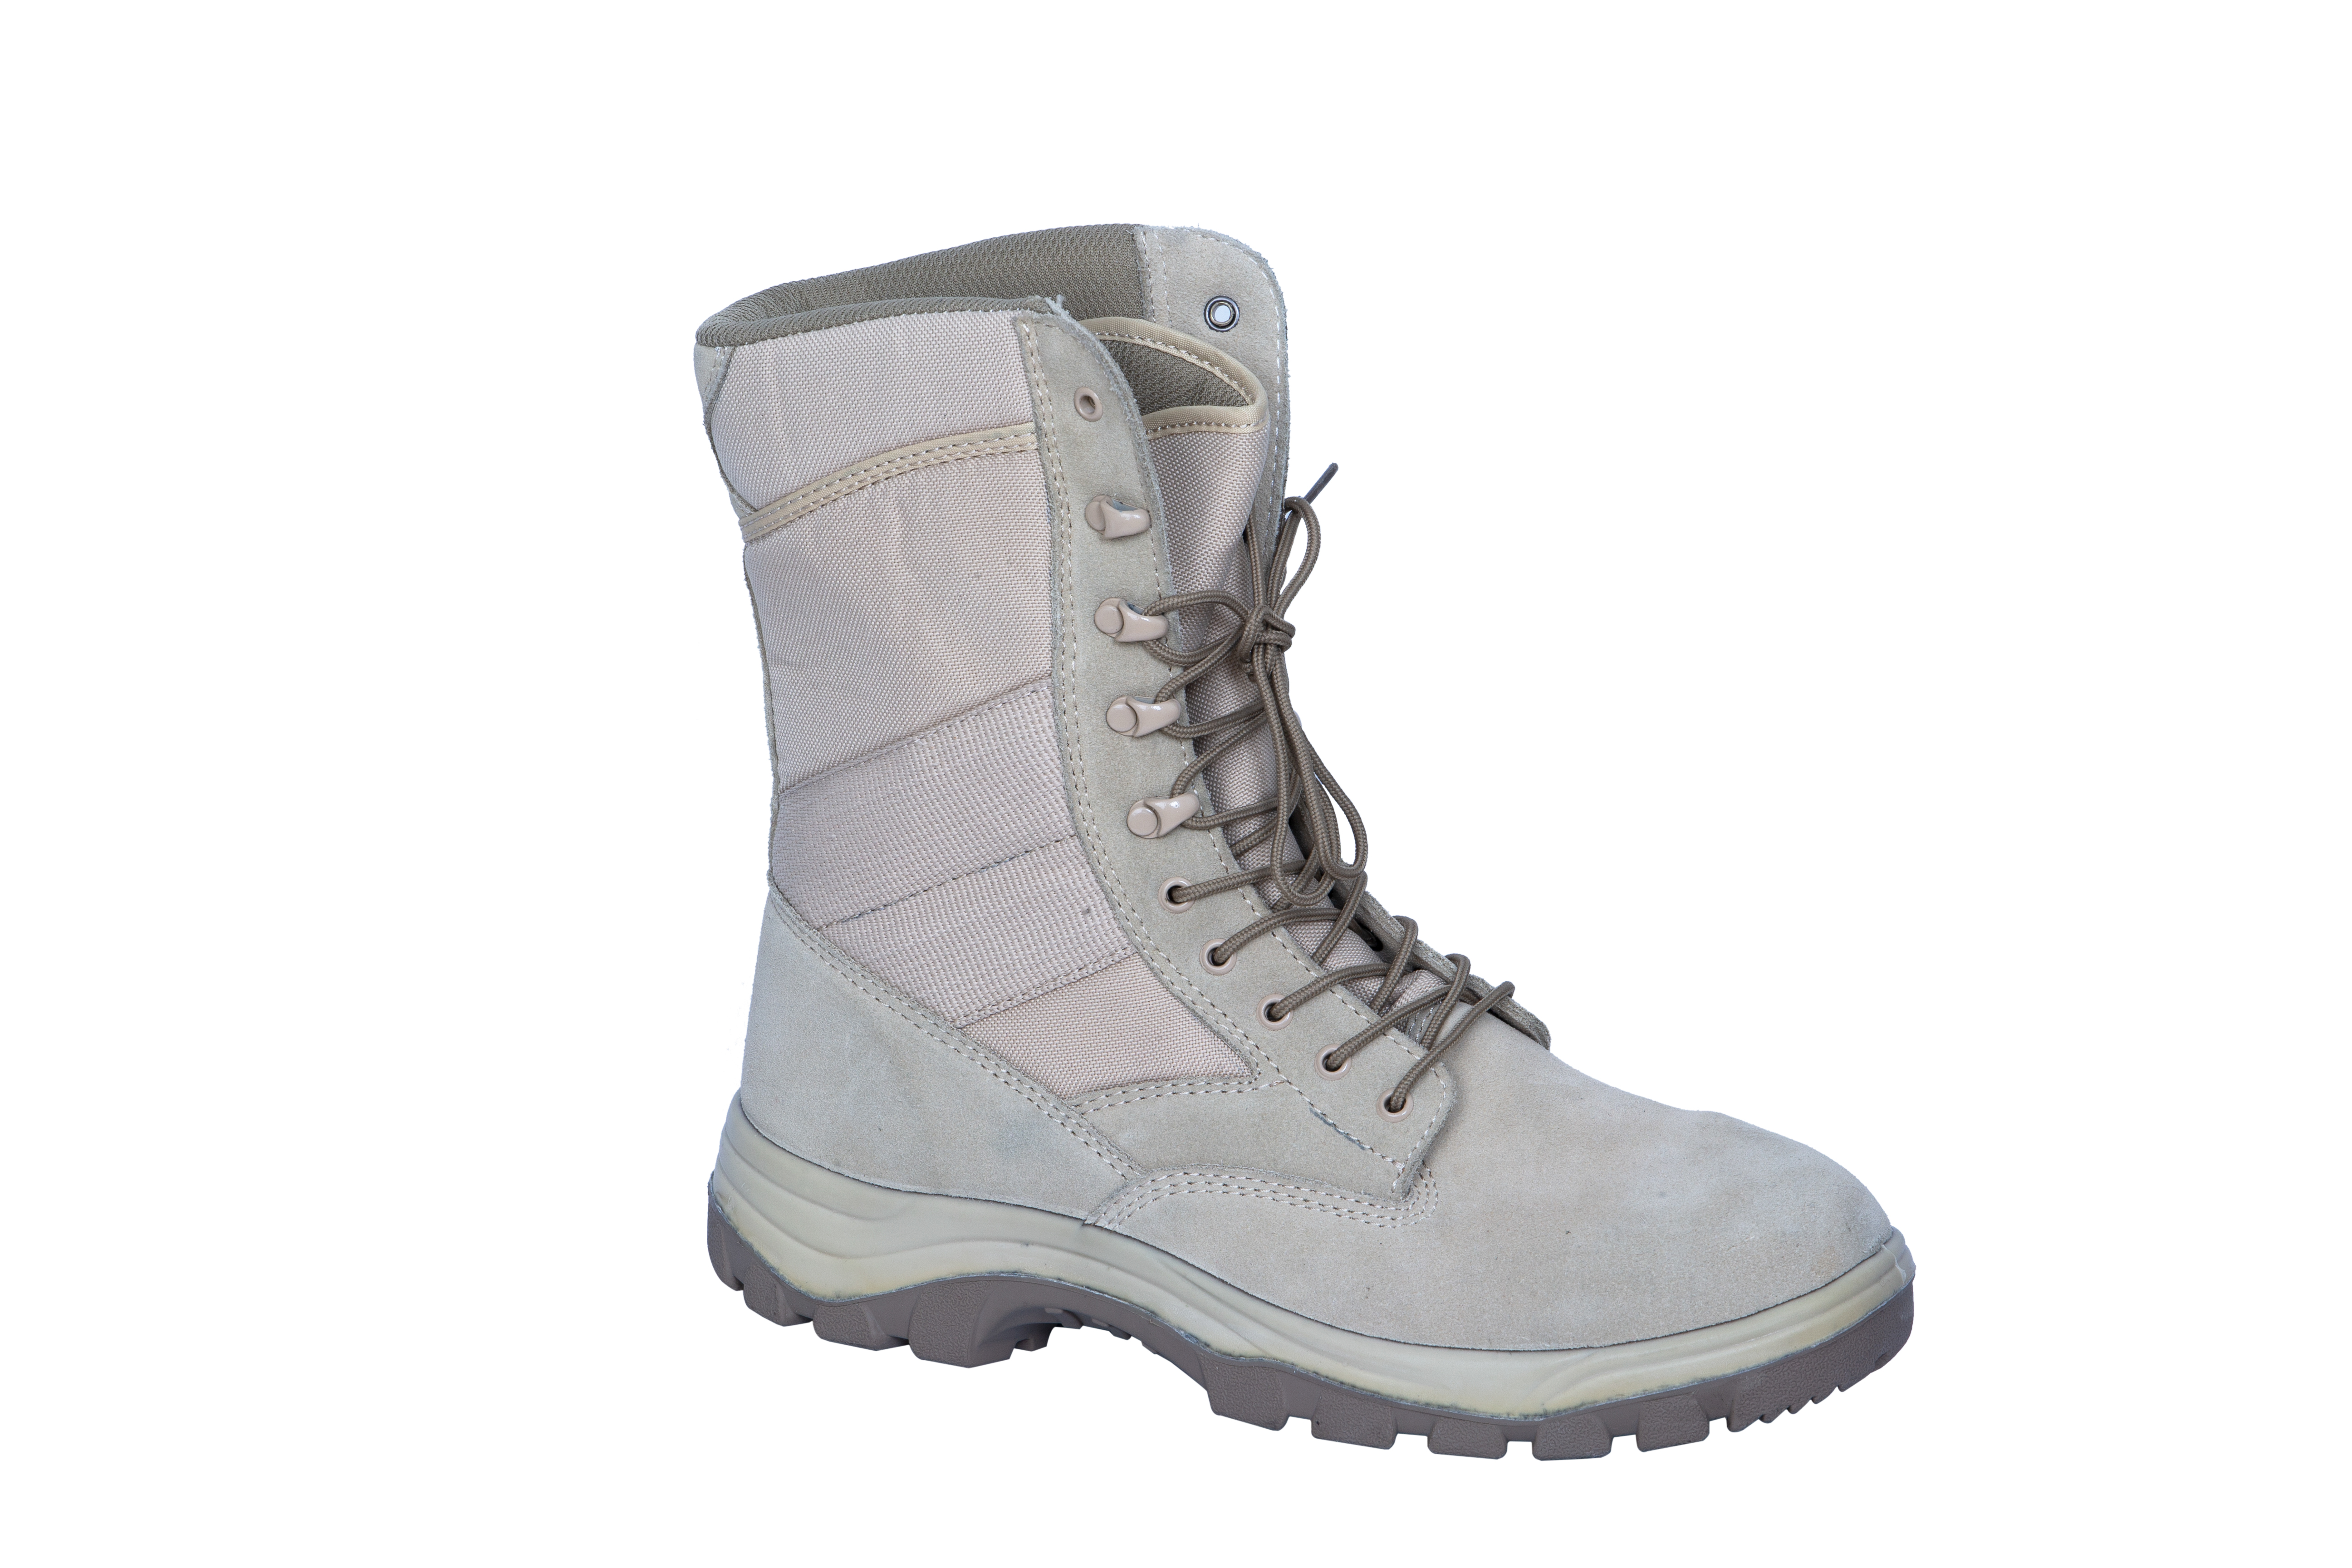 Waterproof military assault boots 